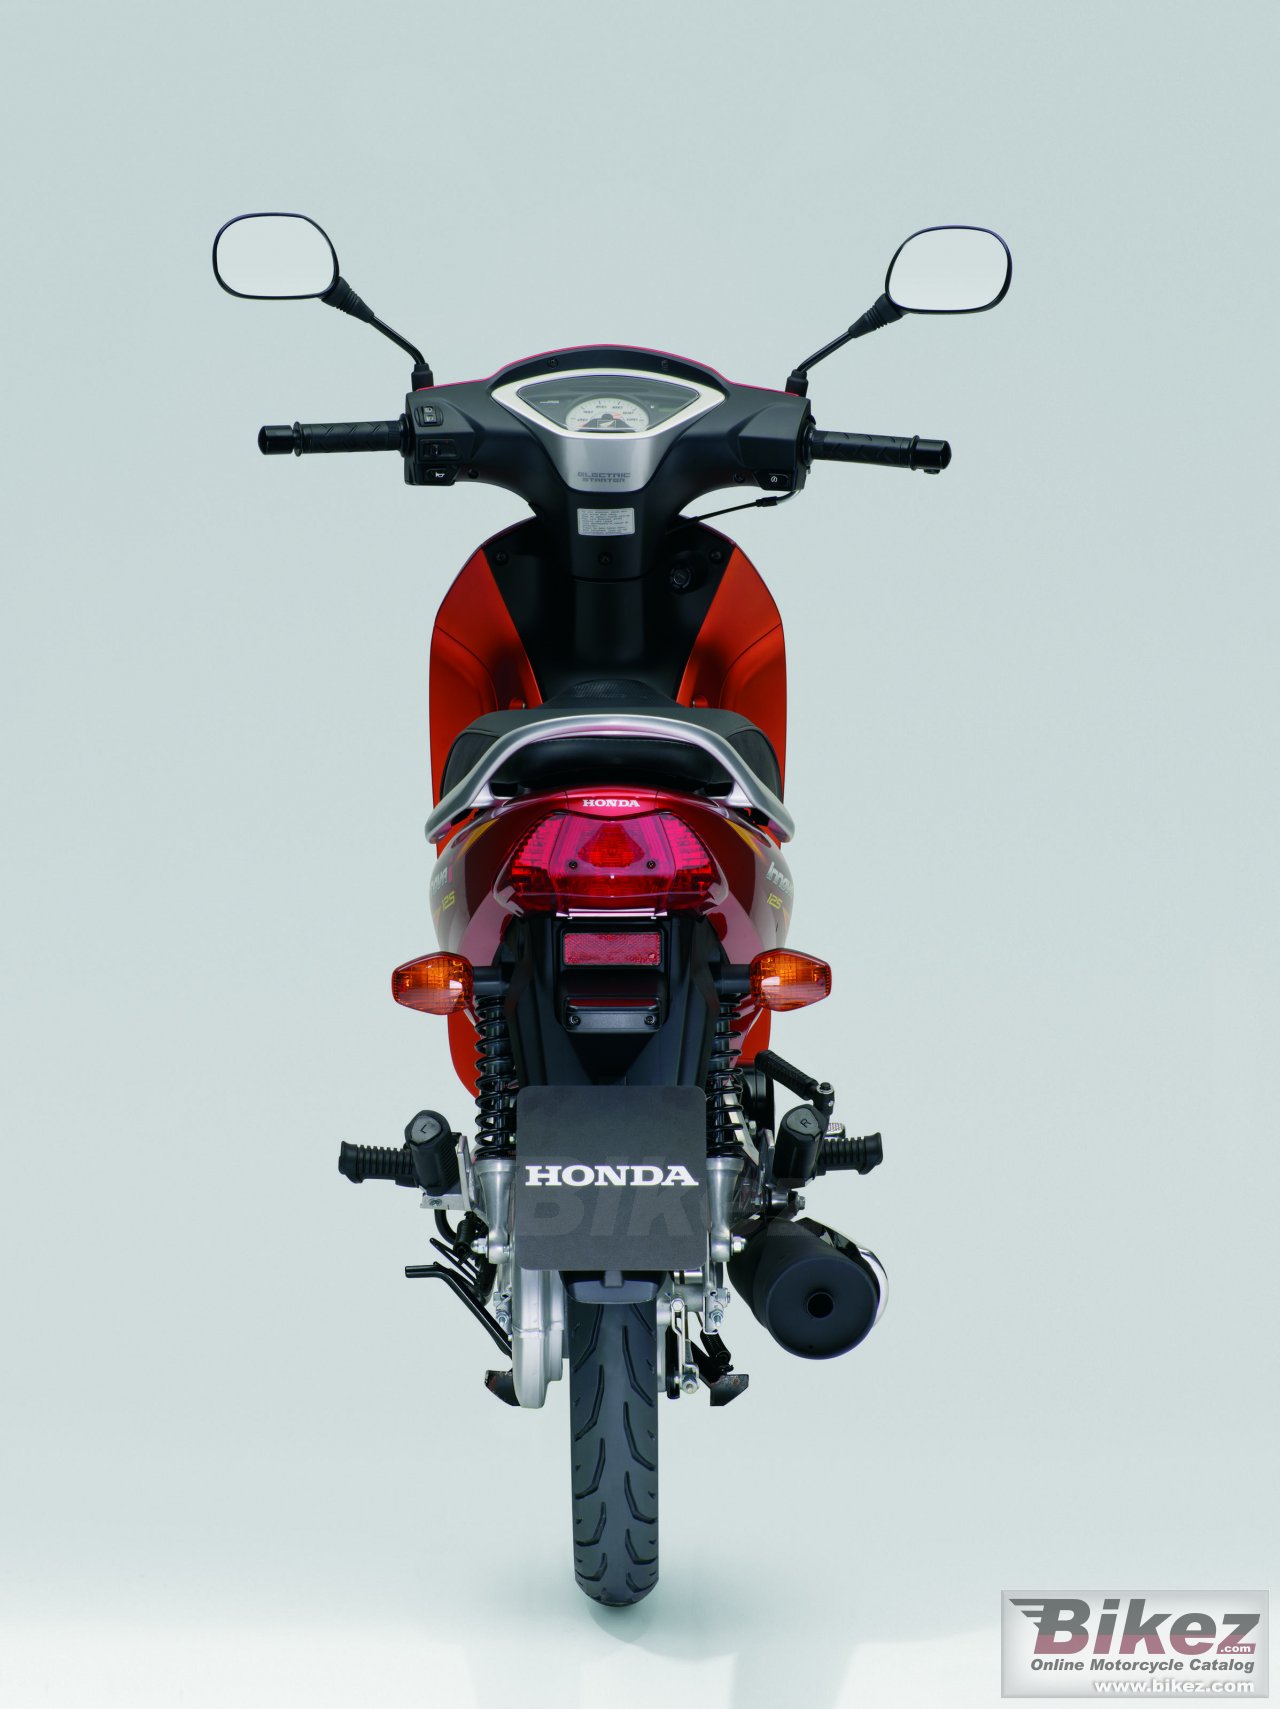 Honda ANF125i Innova